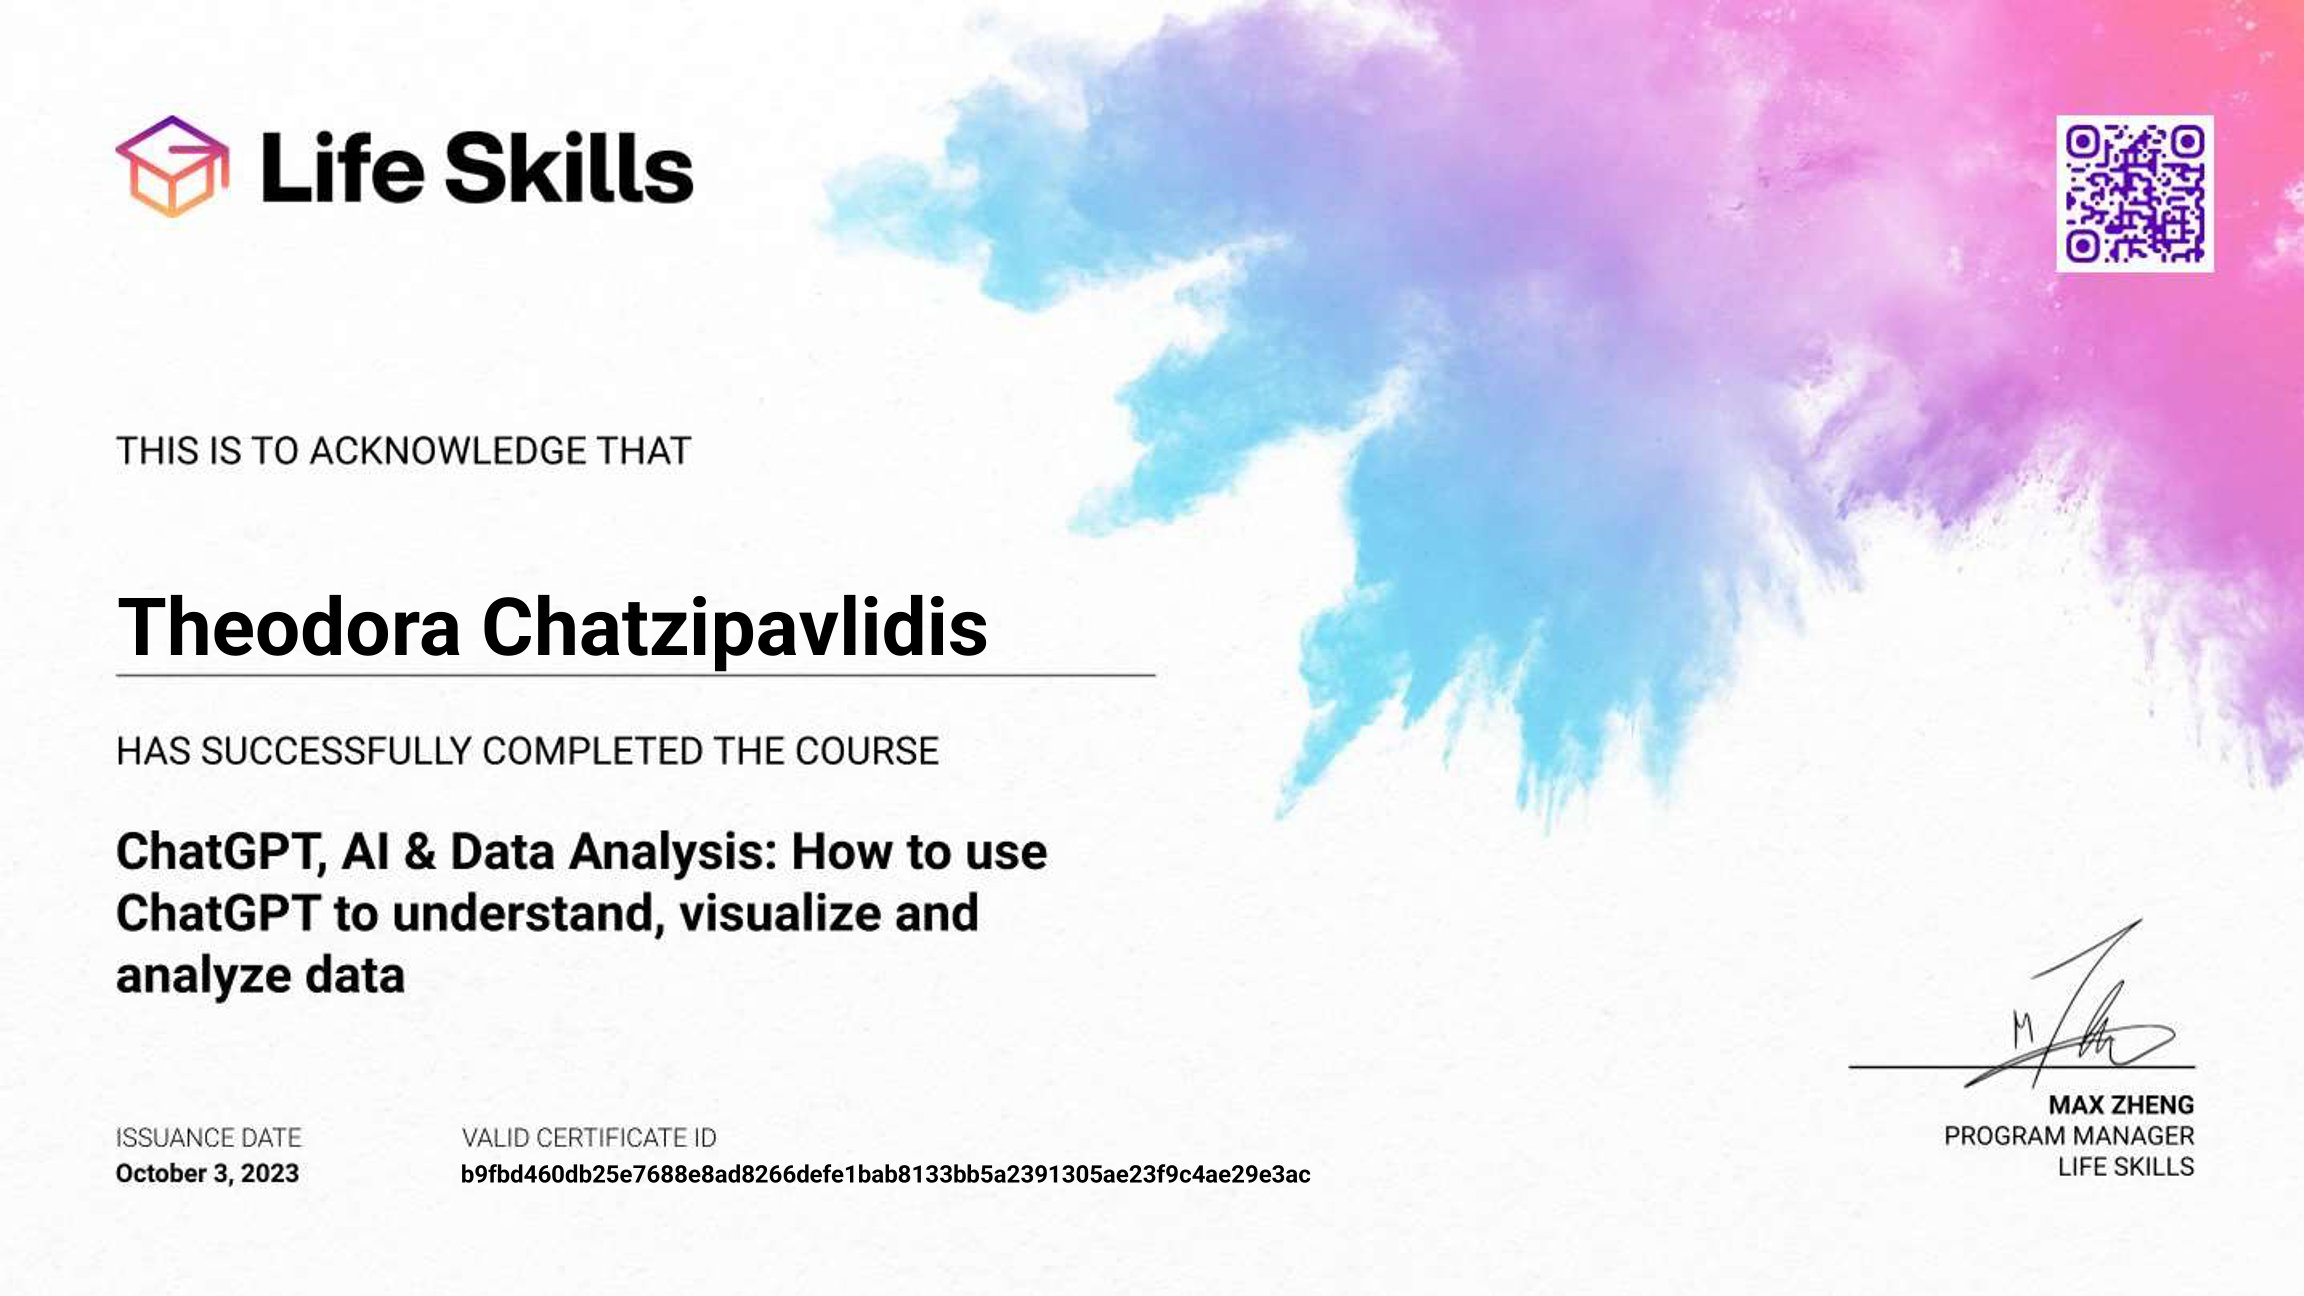 Life Skills - ChatGPT, AI & Data Analysis How to use ChatGPT to understand, visualize and analyze data - Theodora Chatzipavlidis - Certificate